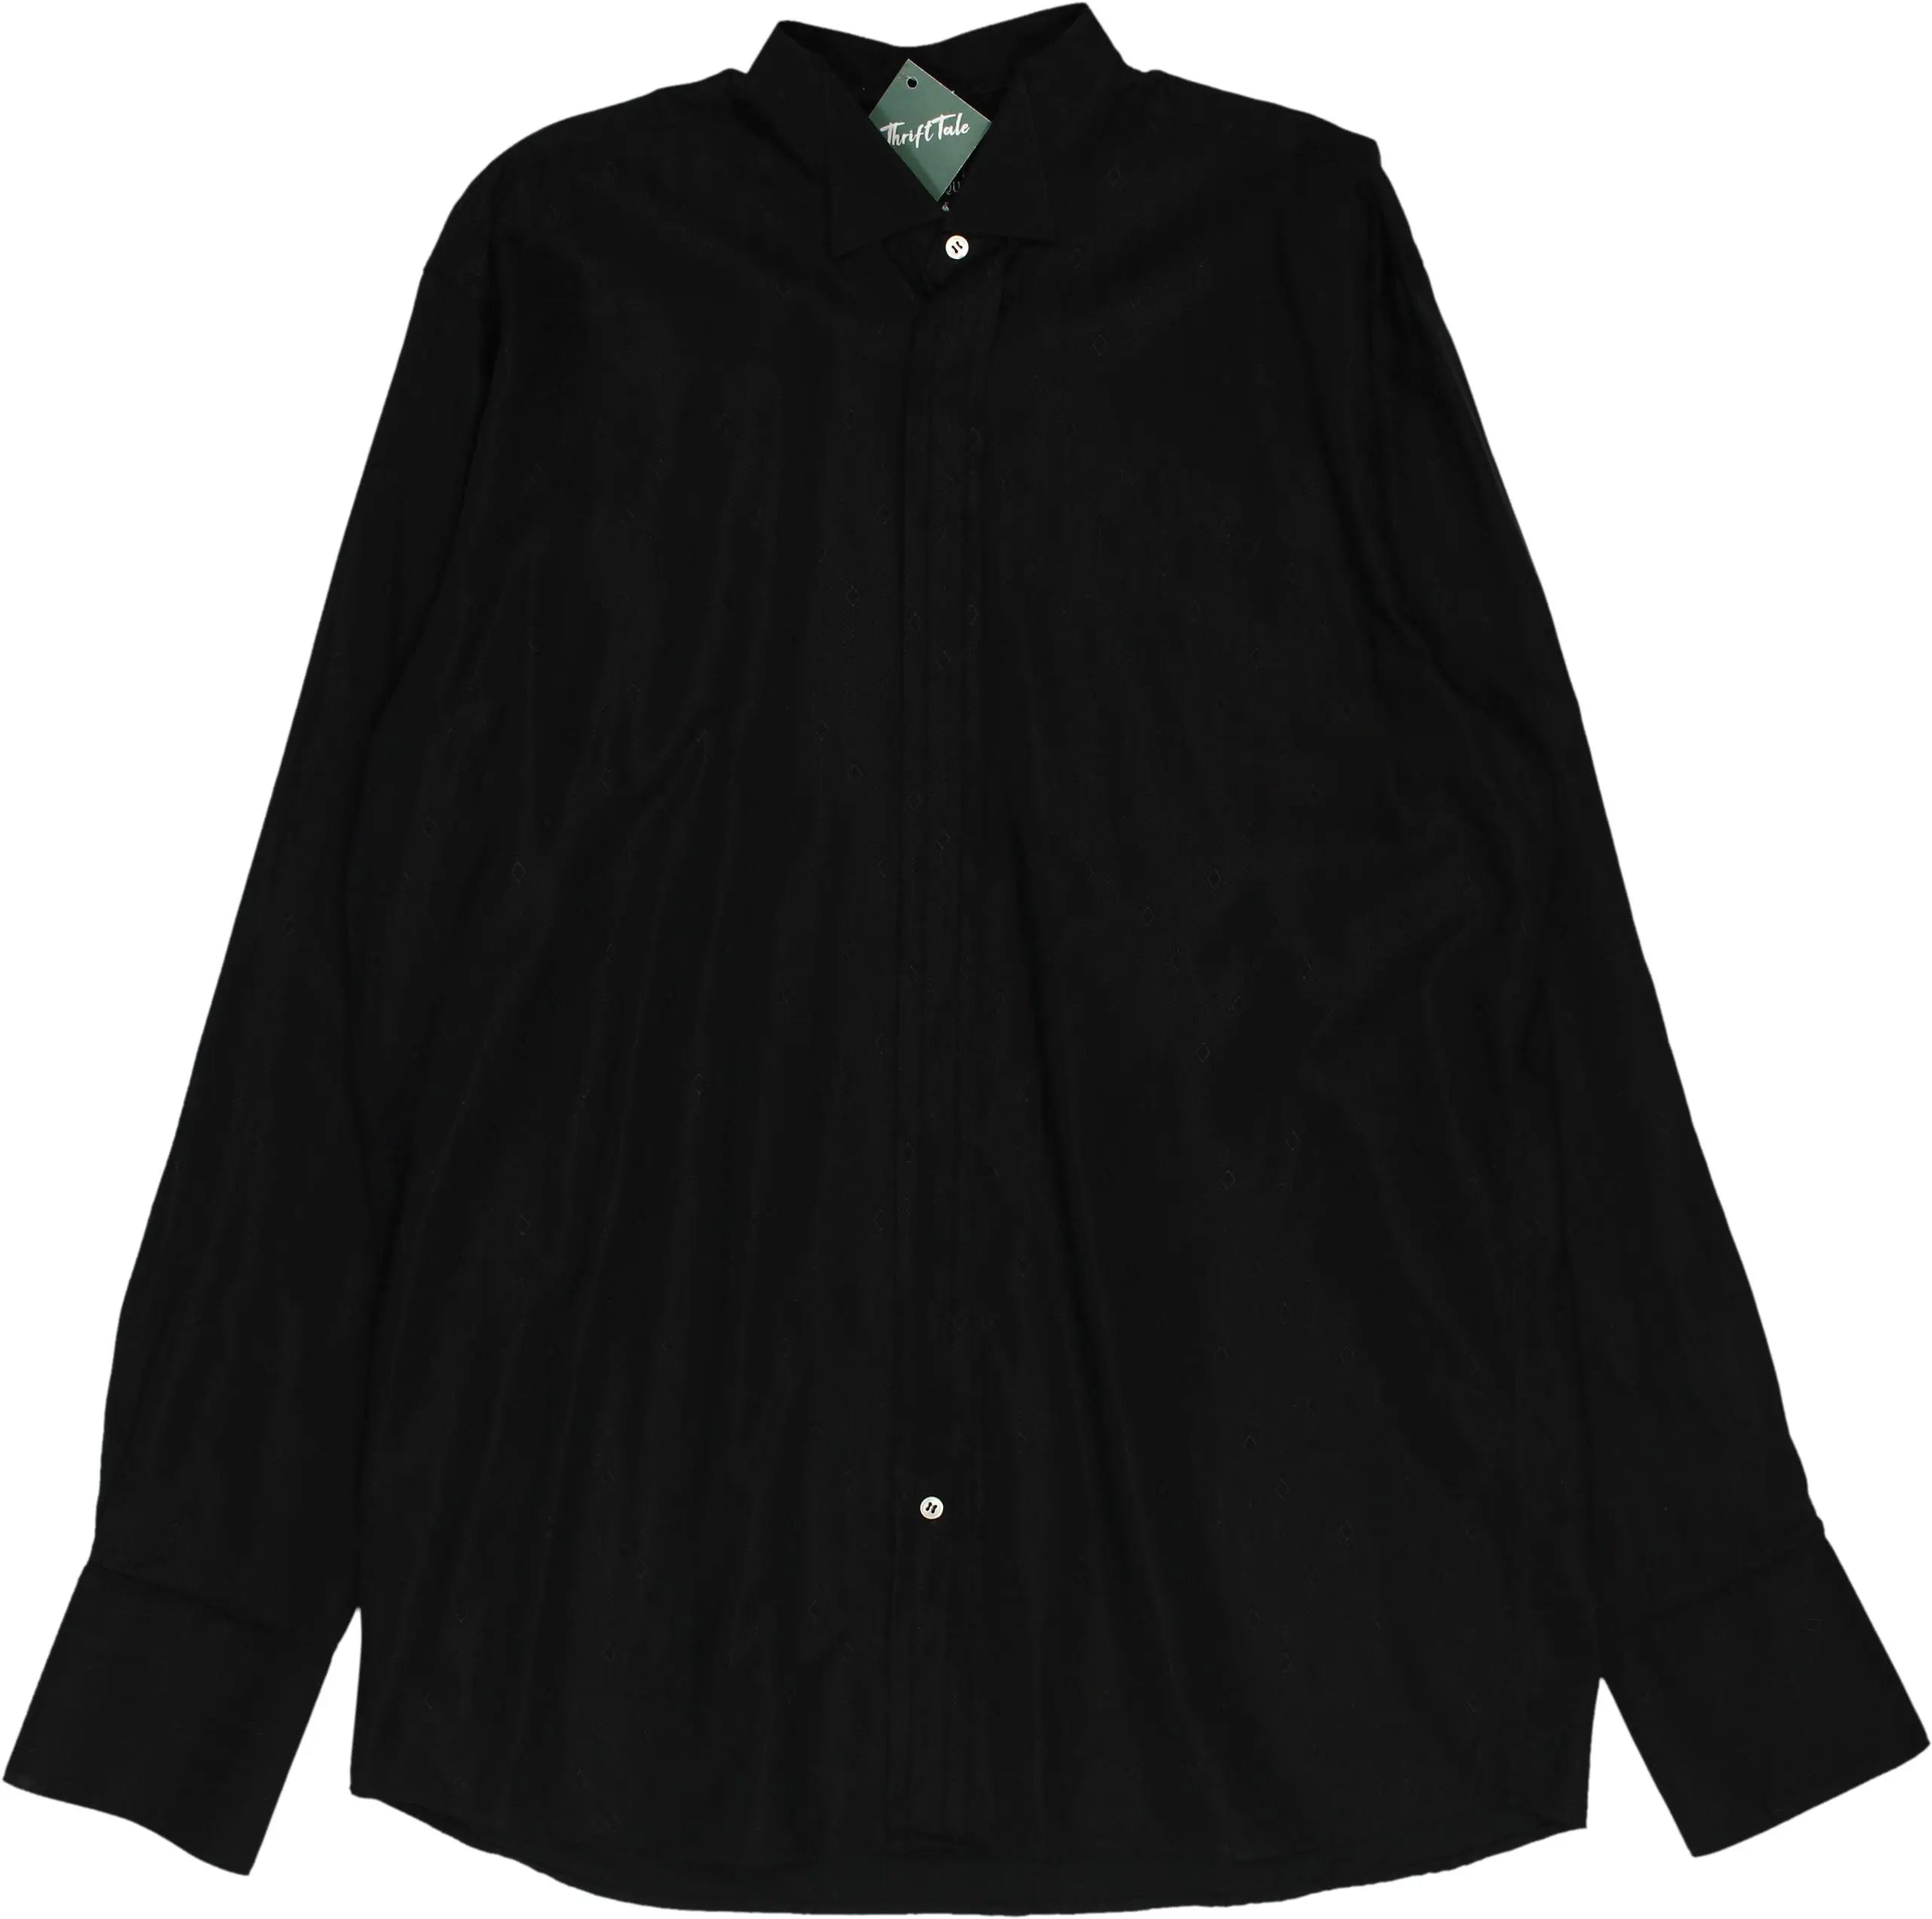 Karl Helmold - Black Shirt by Karl Helmold- ThriftTale.com - Vintage and second handclothing